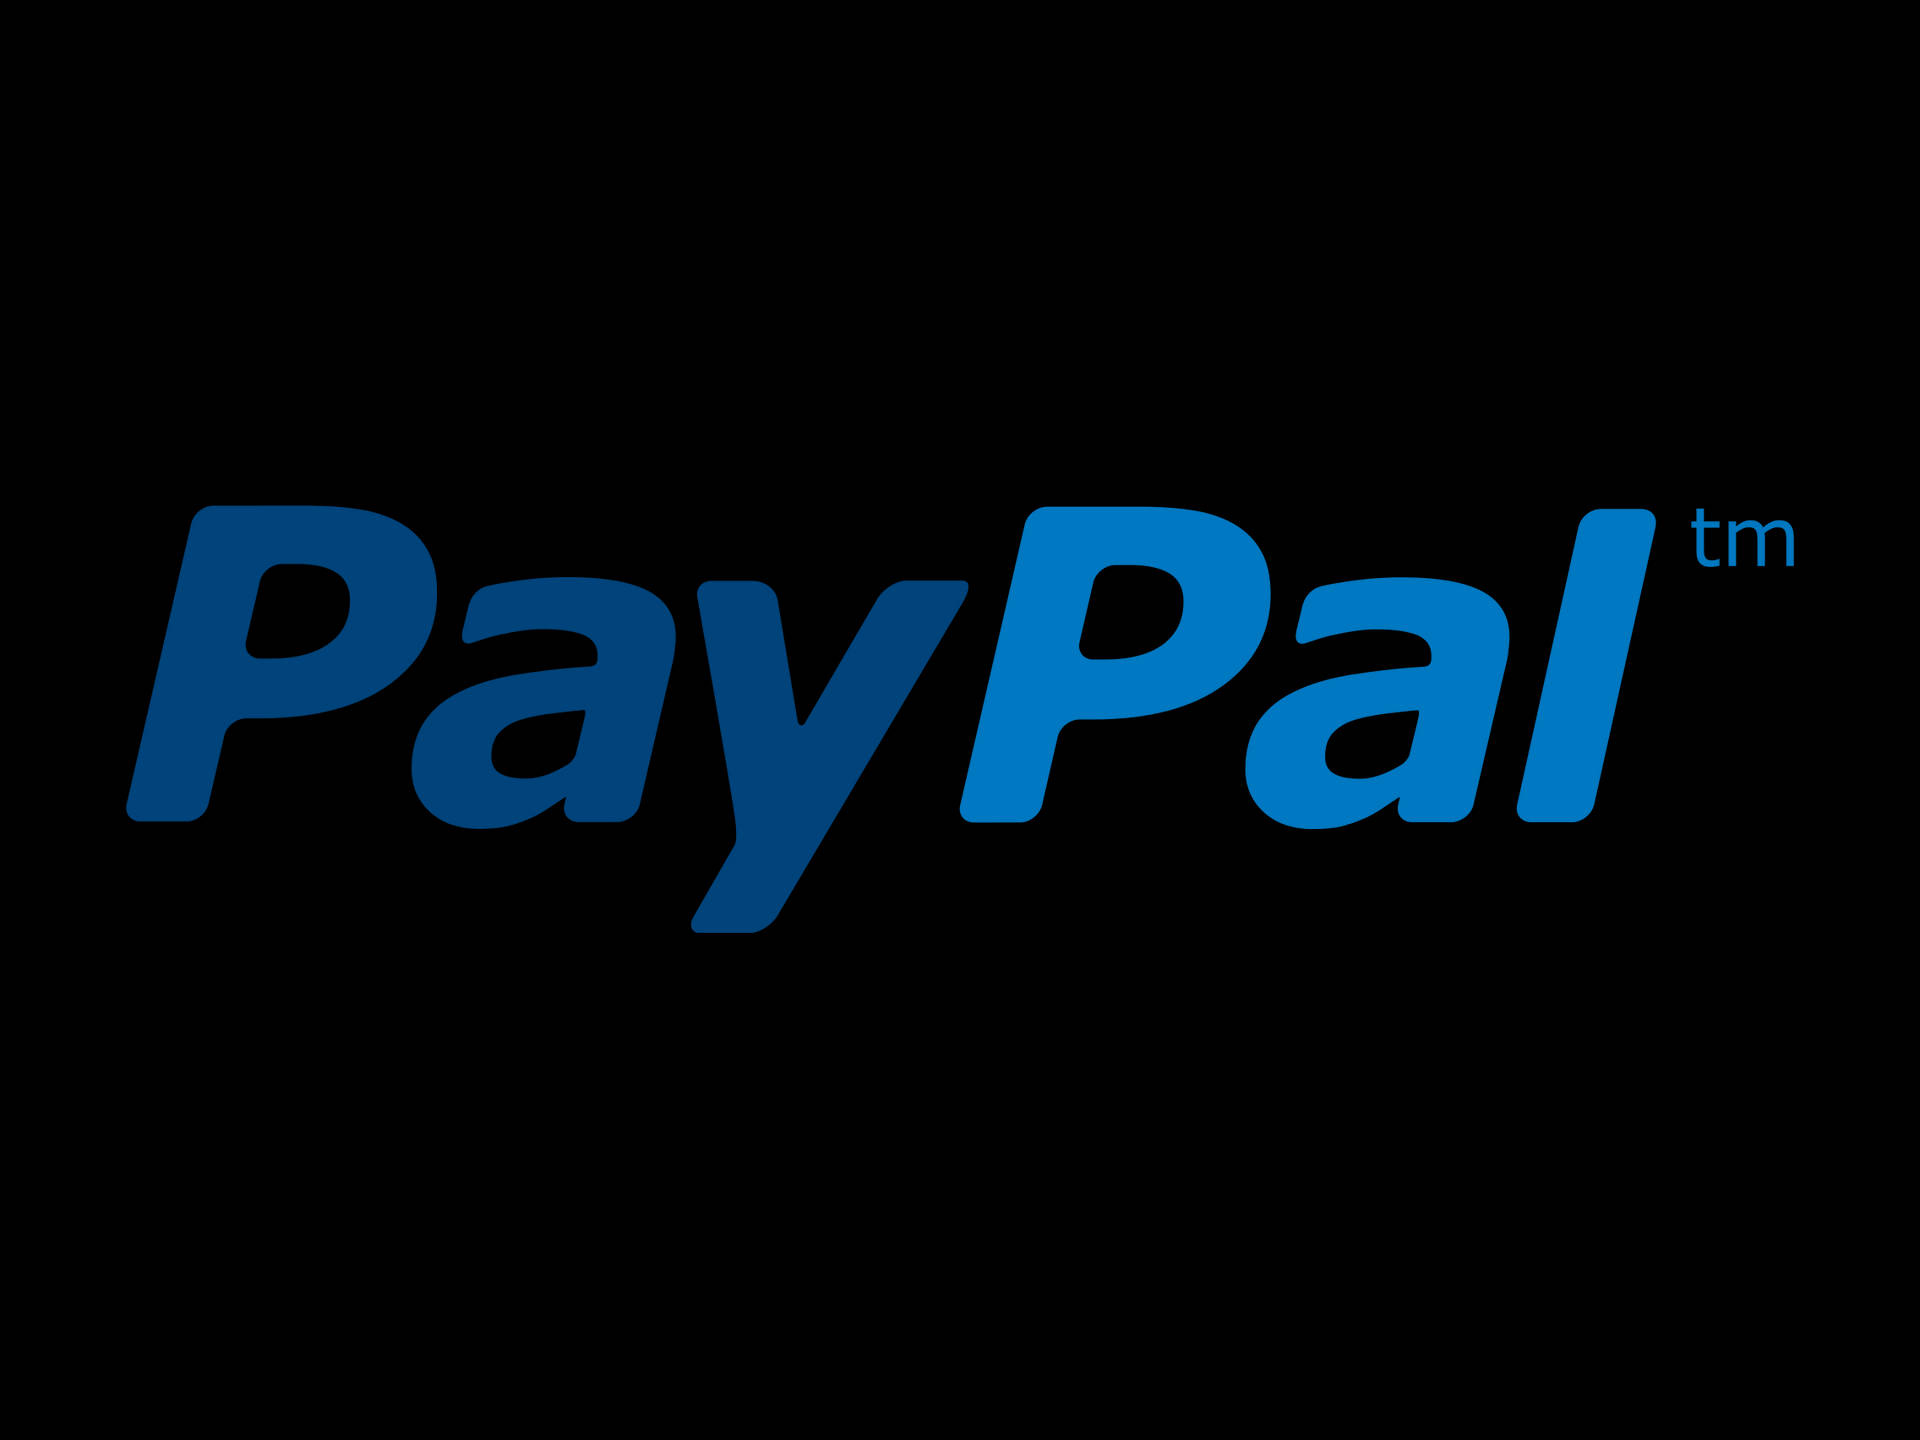 Paypal 2012 Logo Design Background